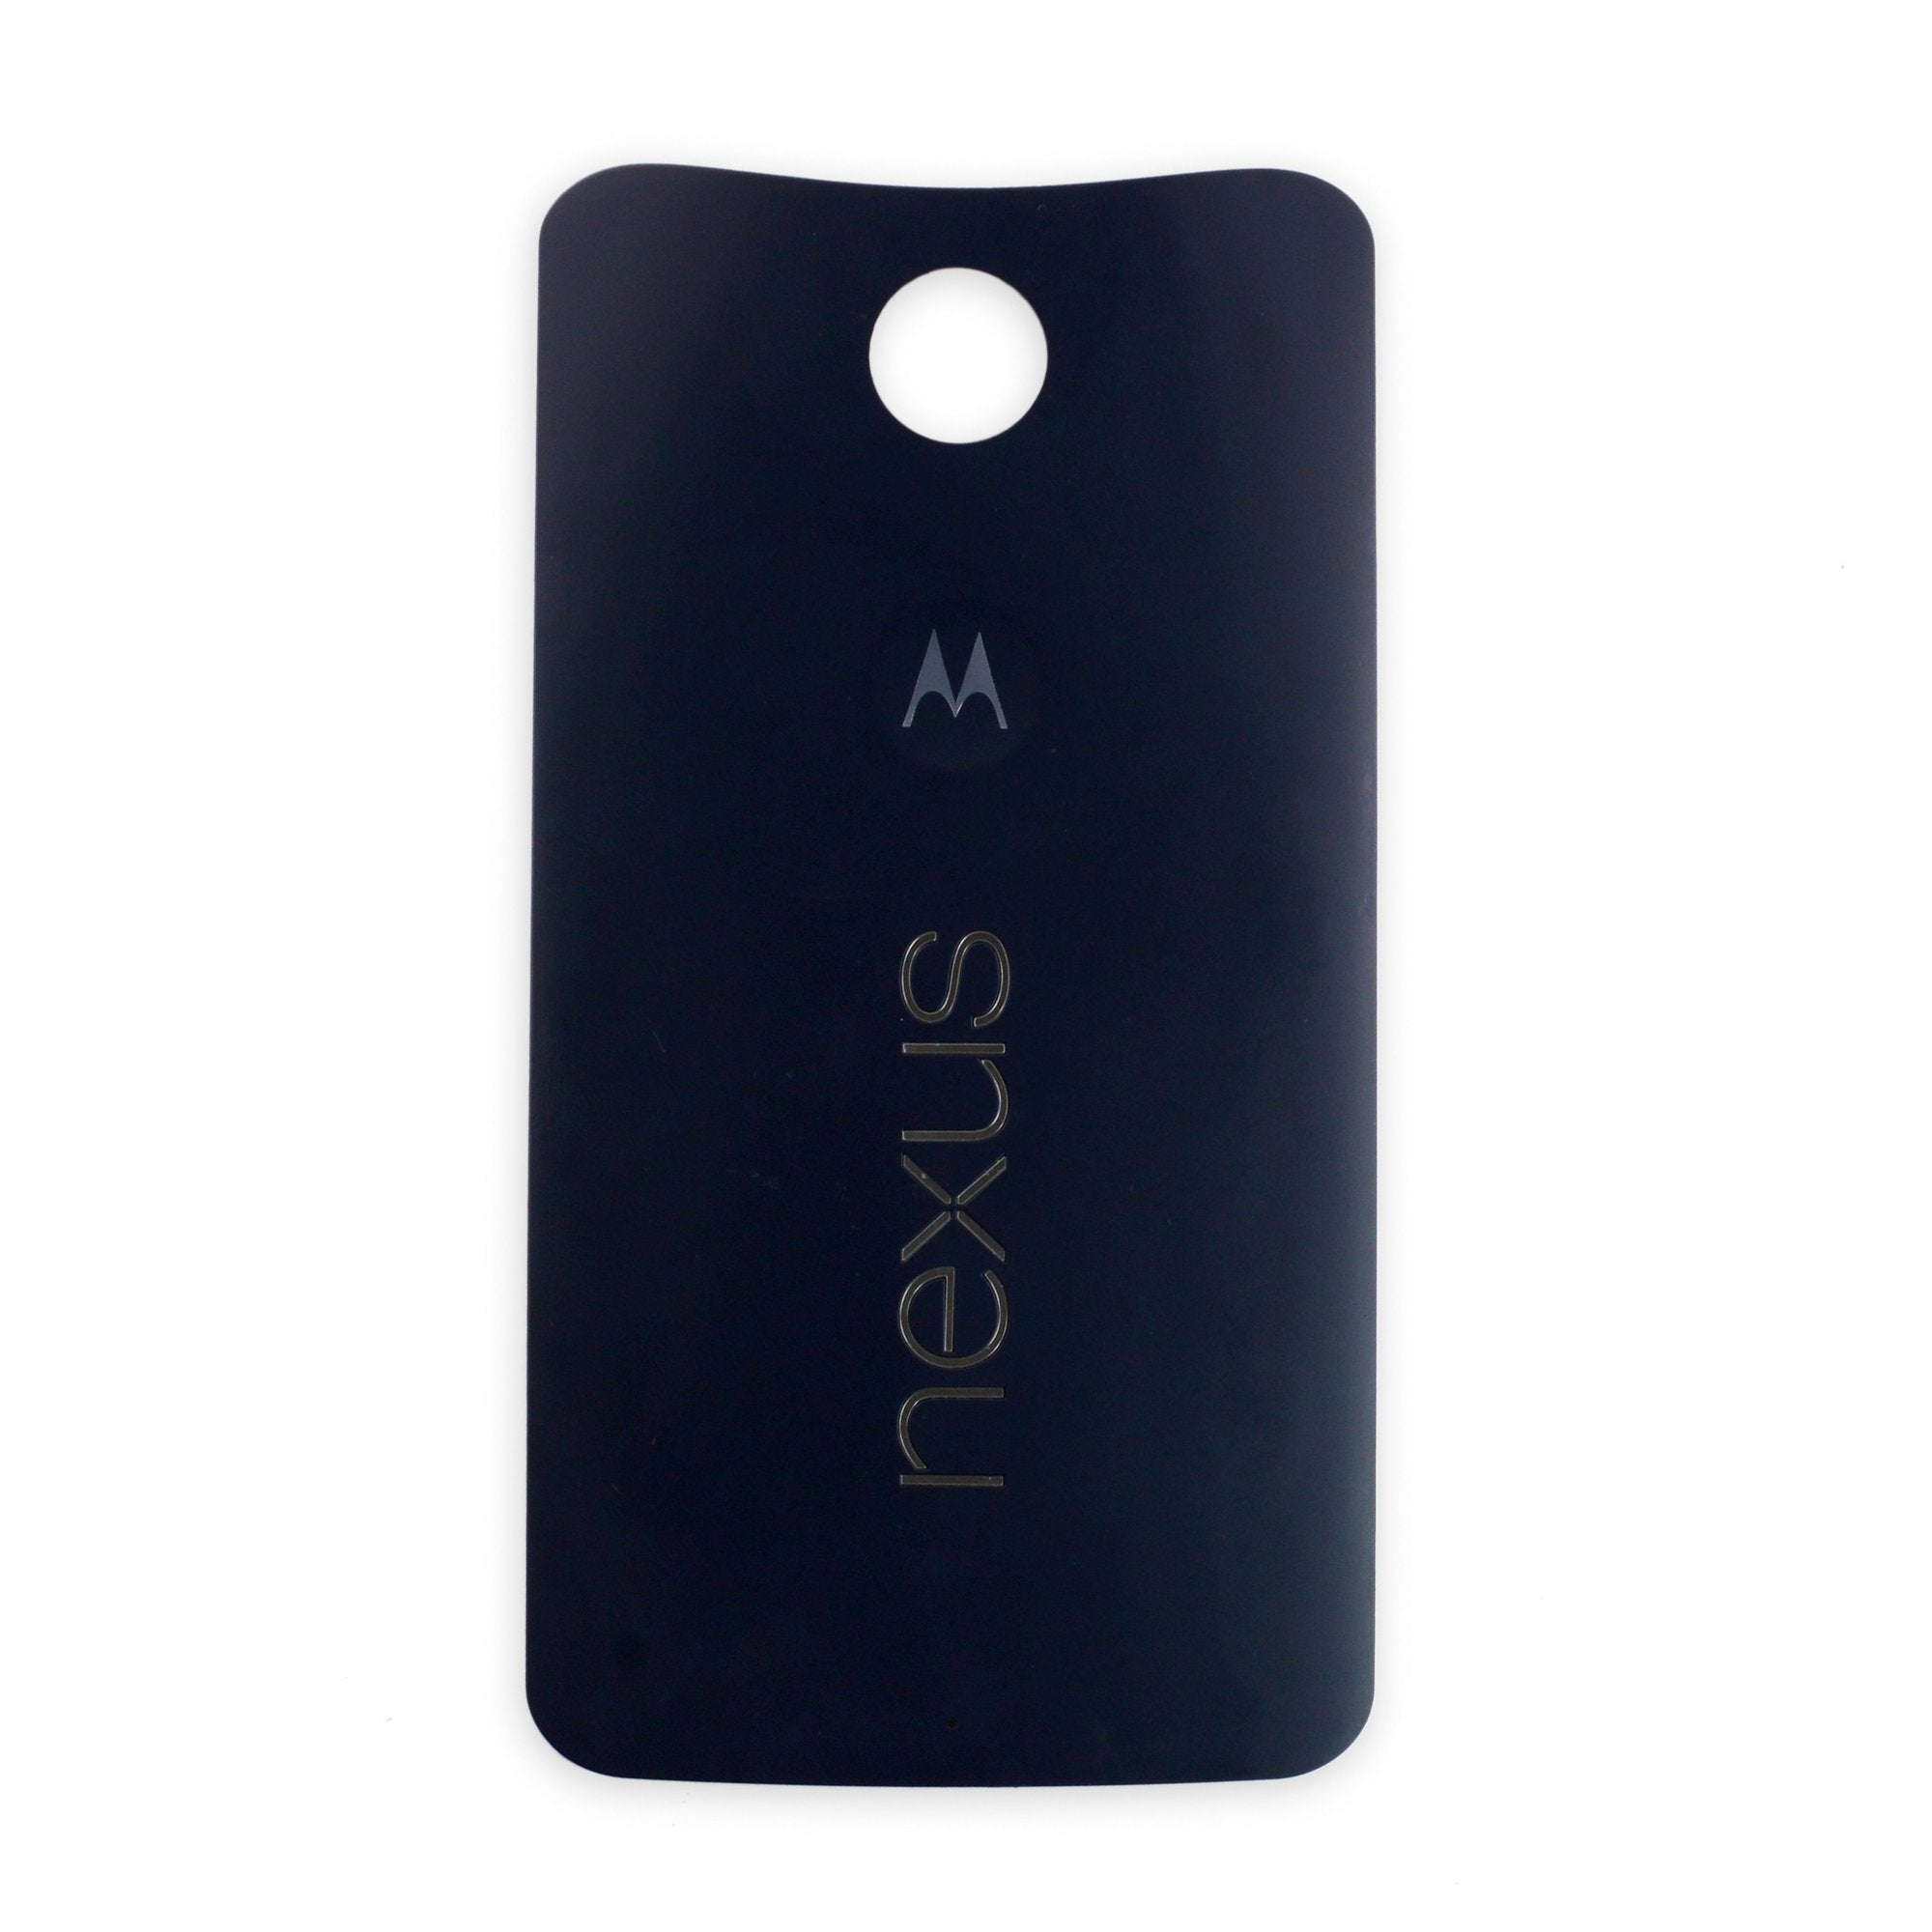 Nexus 6 Rear Panel Black Used, A-Stock